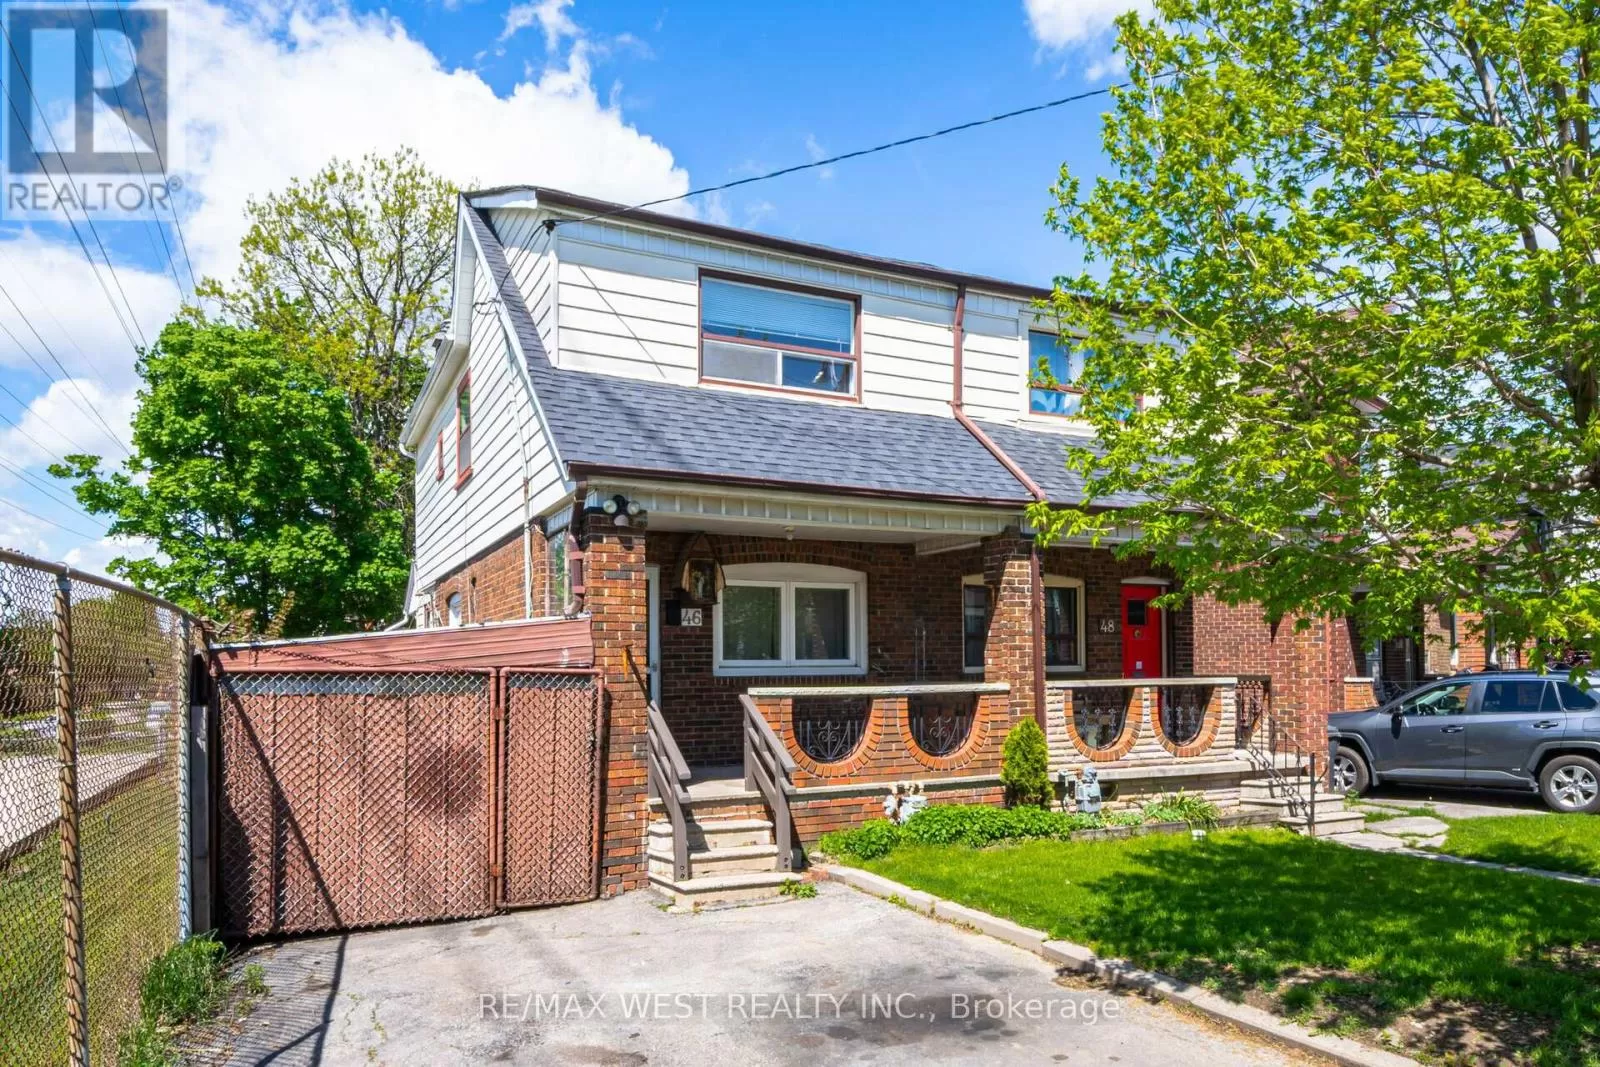 House for rent: 46 Carrick Avenue, Toronto, Ontario M6N 3J5